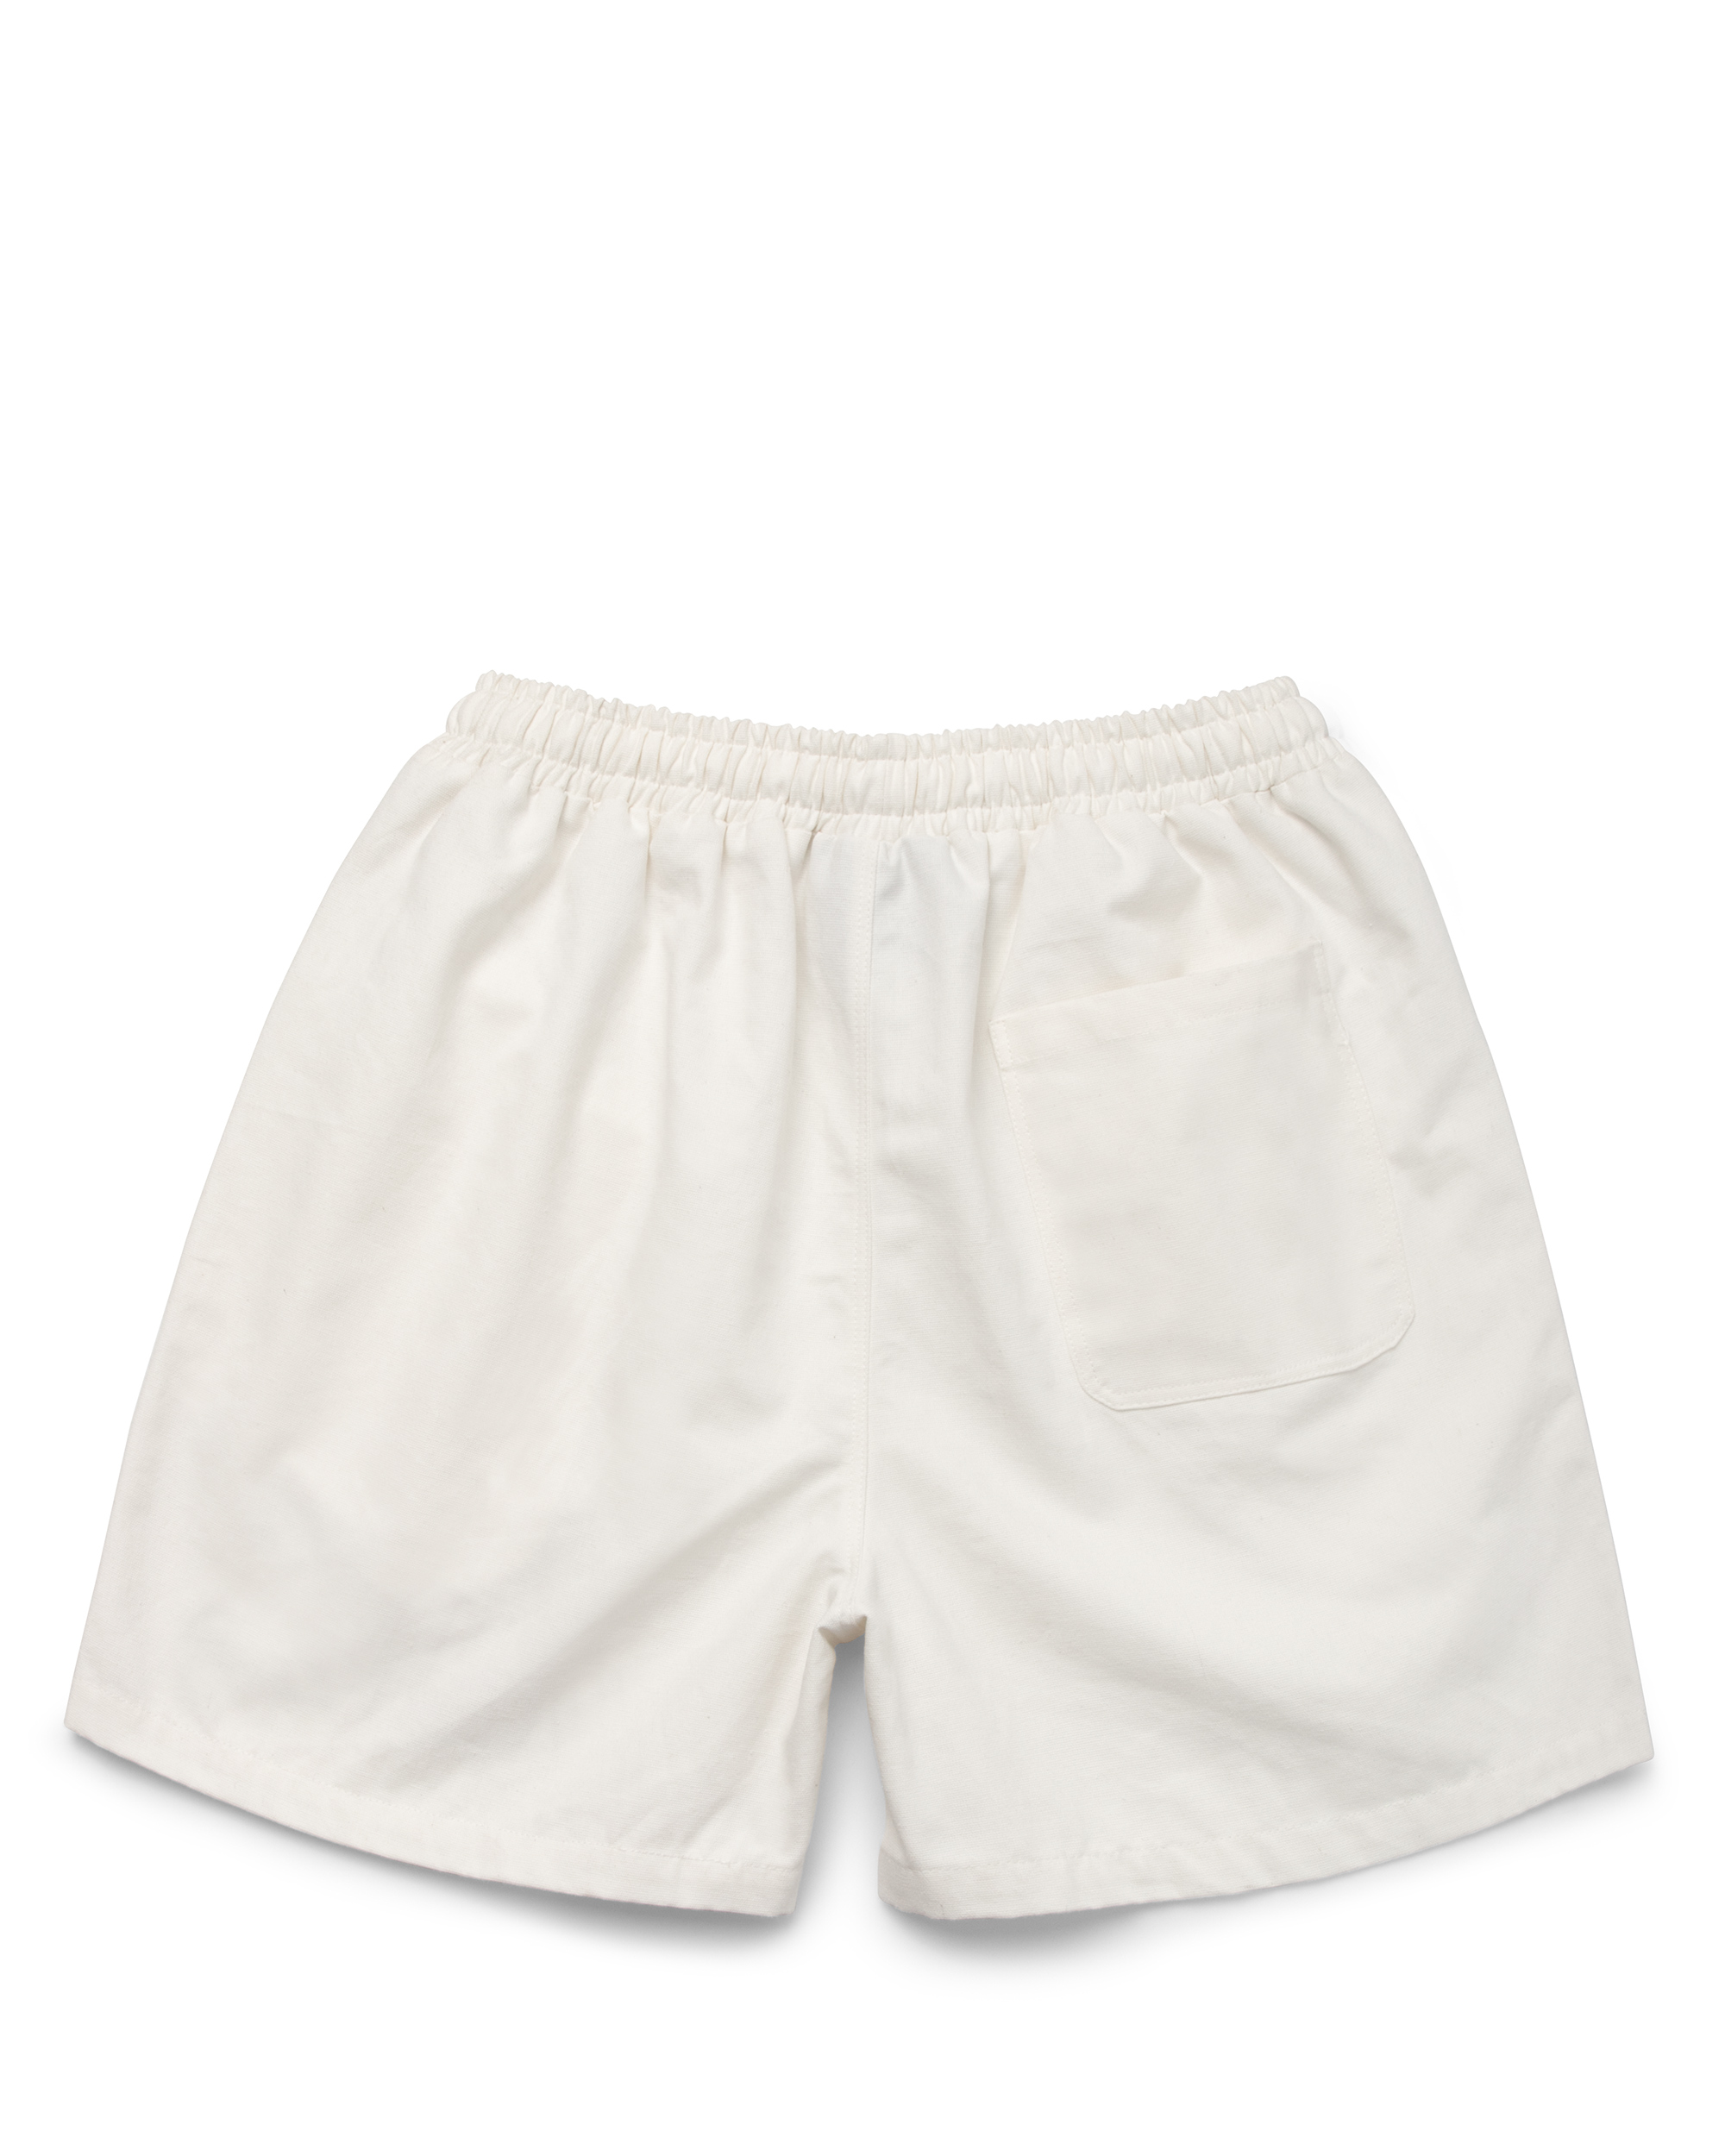 Dico Wavy Shorts - Cream